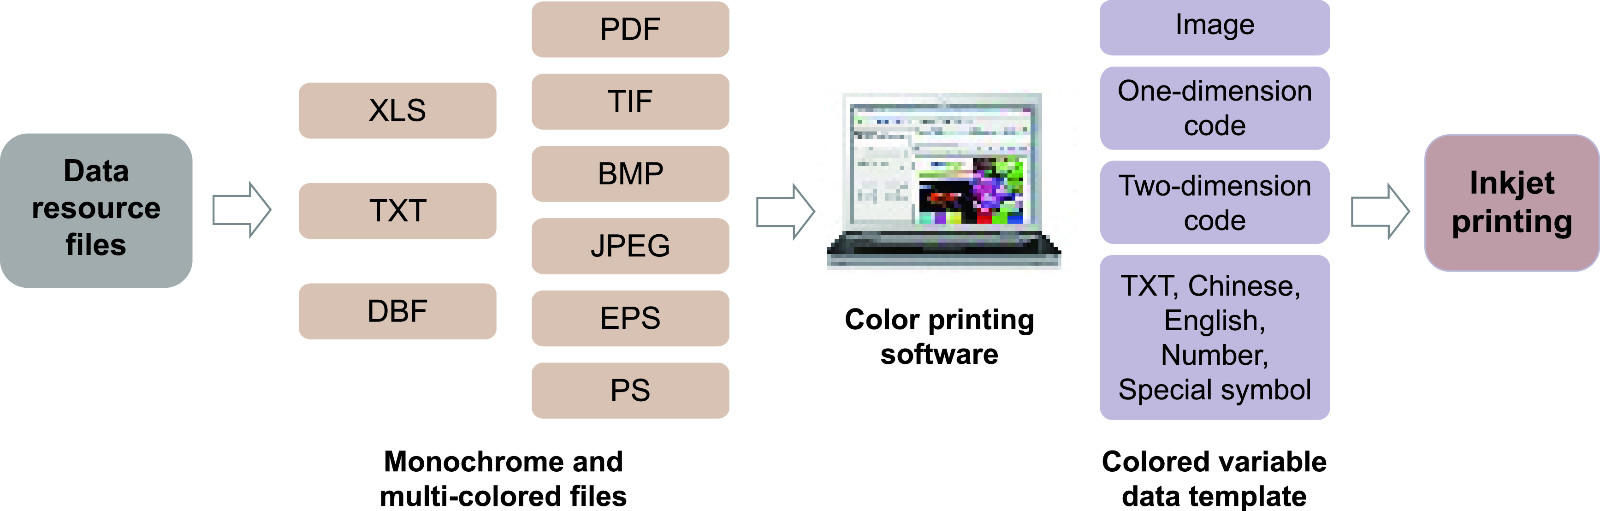 cost effective digital inkjet printing arojet custom made for packaging